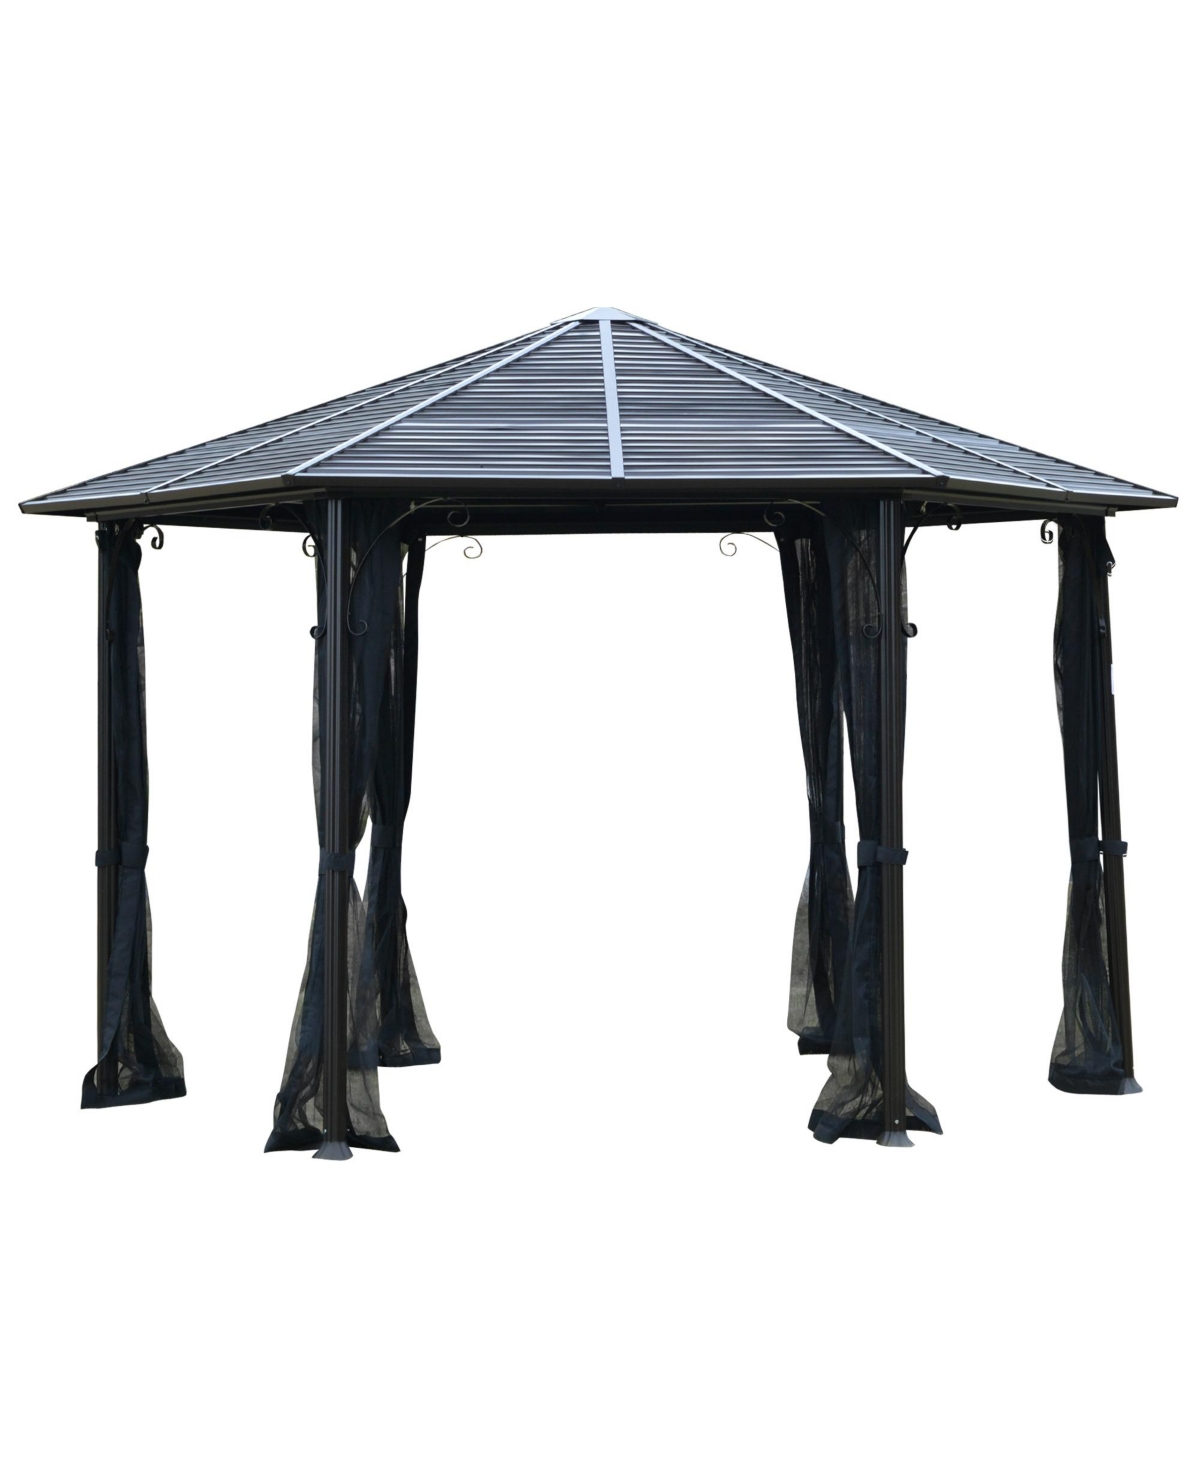 13x13 Hardtop Gazebo with Aluminum Frame, Permanent Metal Roof Gazebo Canopy with Mesh Netting for Garden, Patio, Backyard, Black - Black